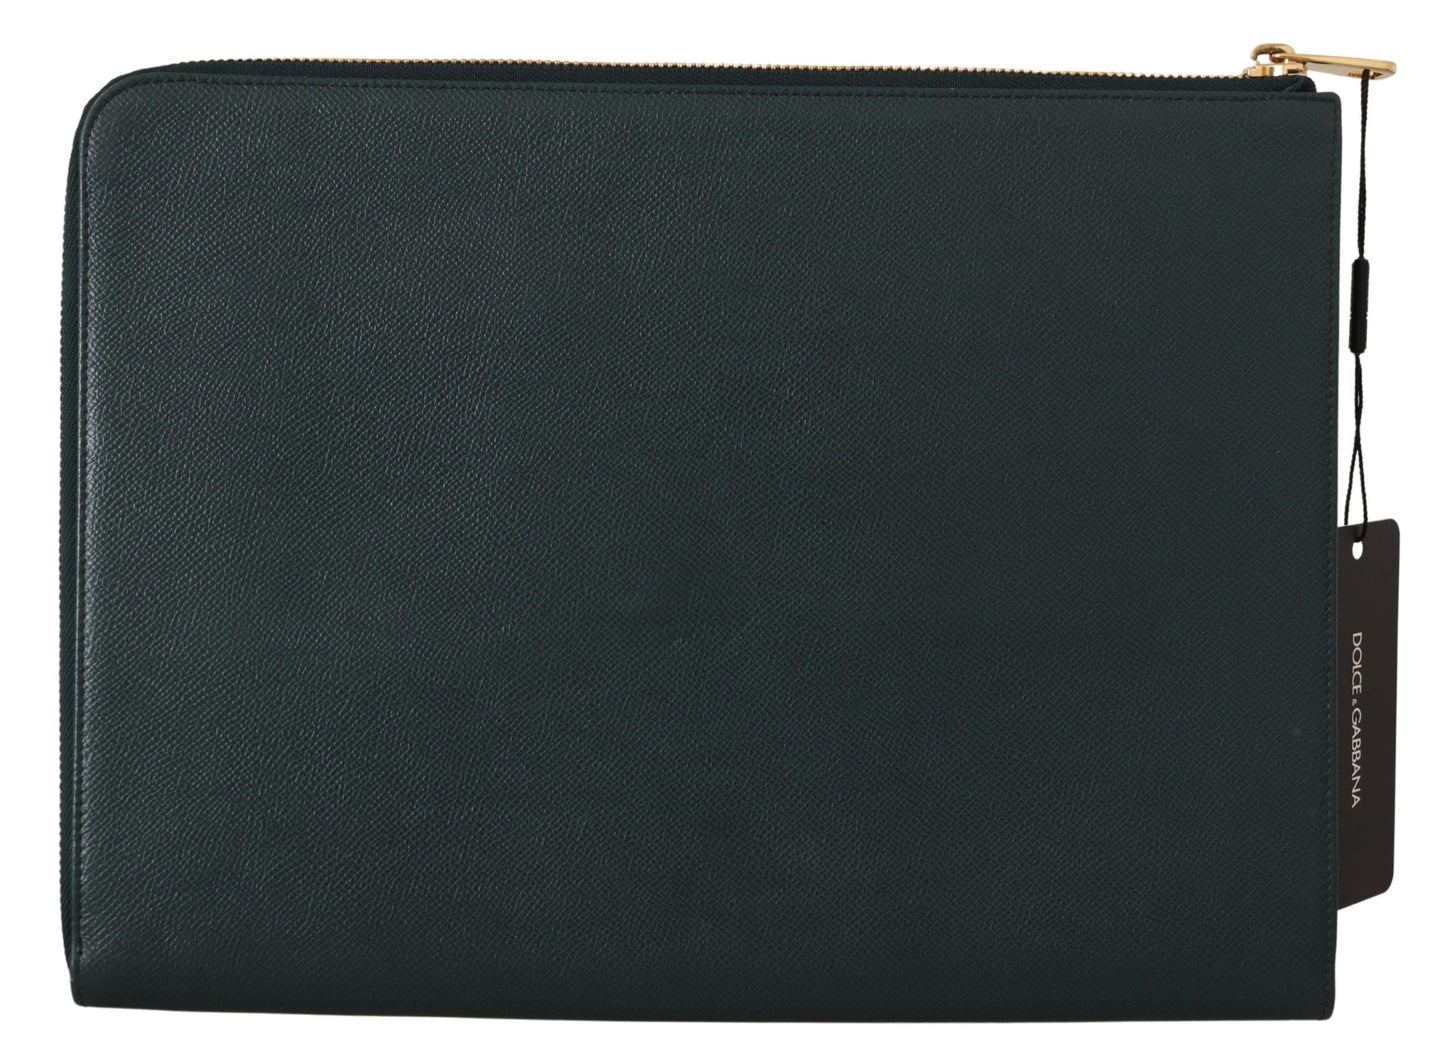 Green Leather Document Holder Zip Around Pouch Wallet